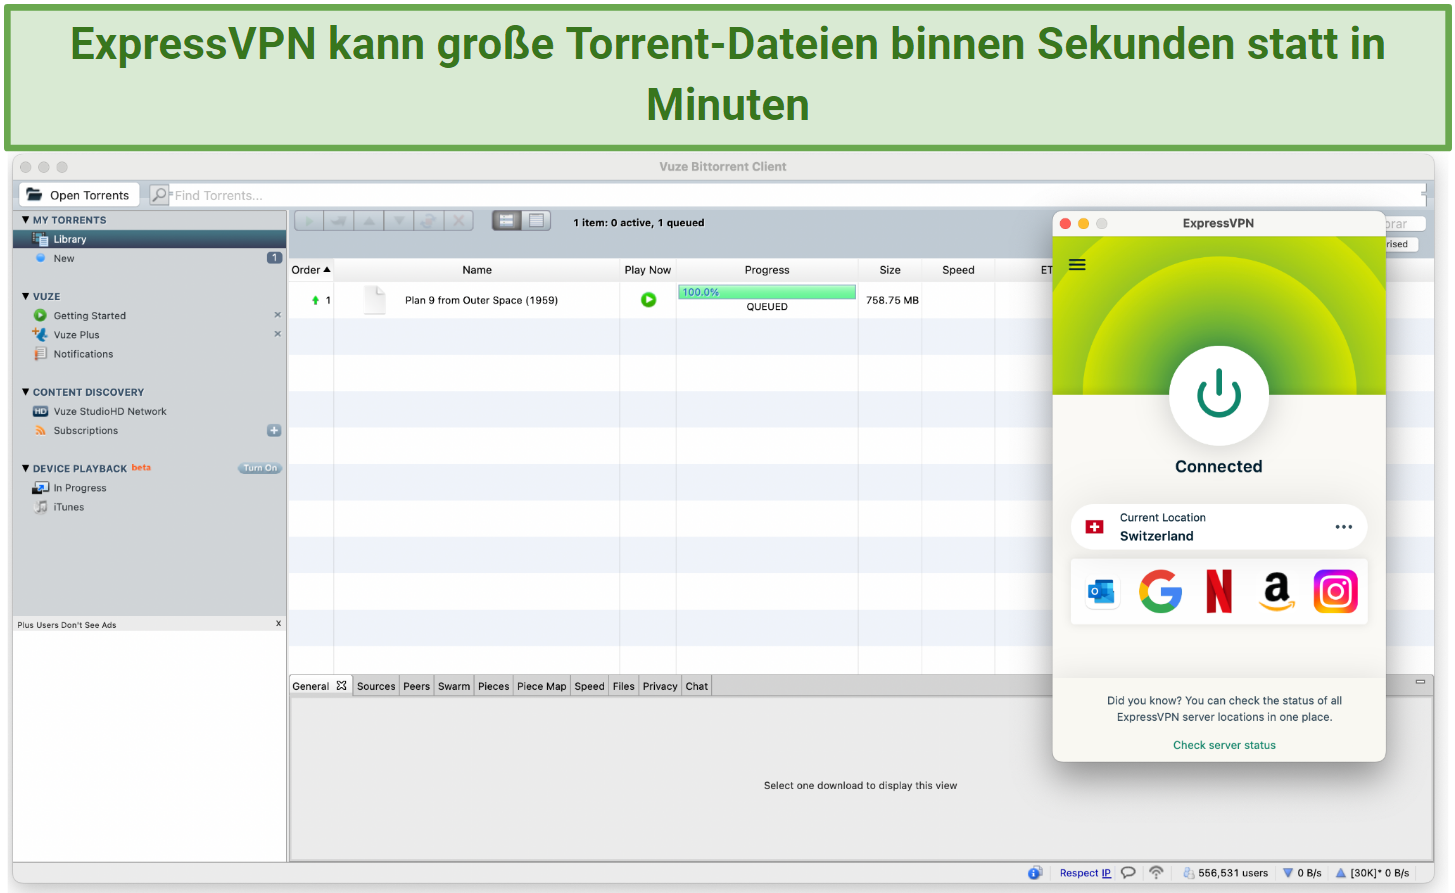 Screenshot showing the ExpressVPN app connected to a server in Switzerland over Vuze torrent downloading client